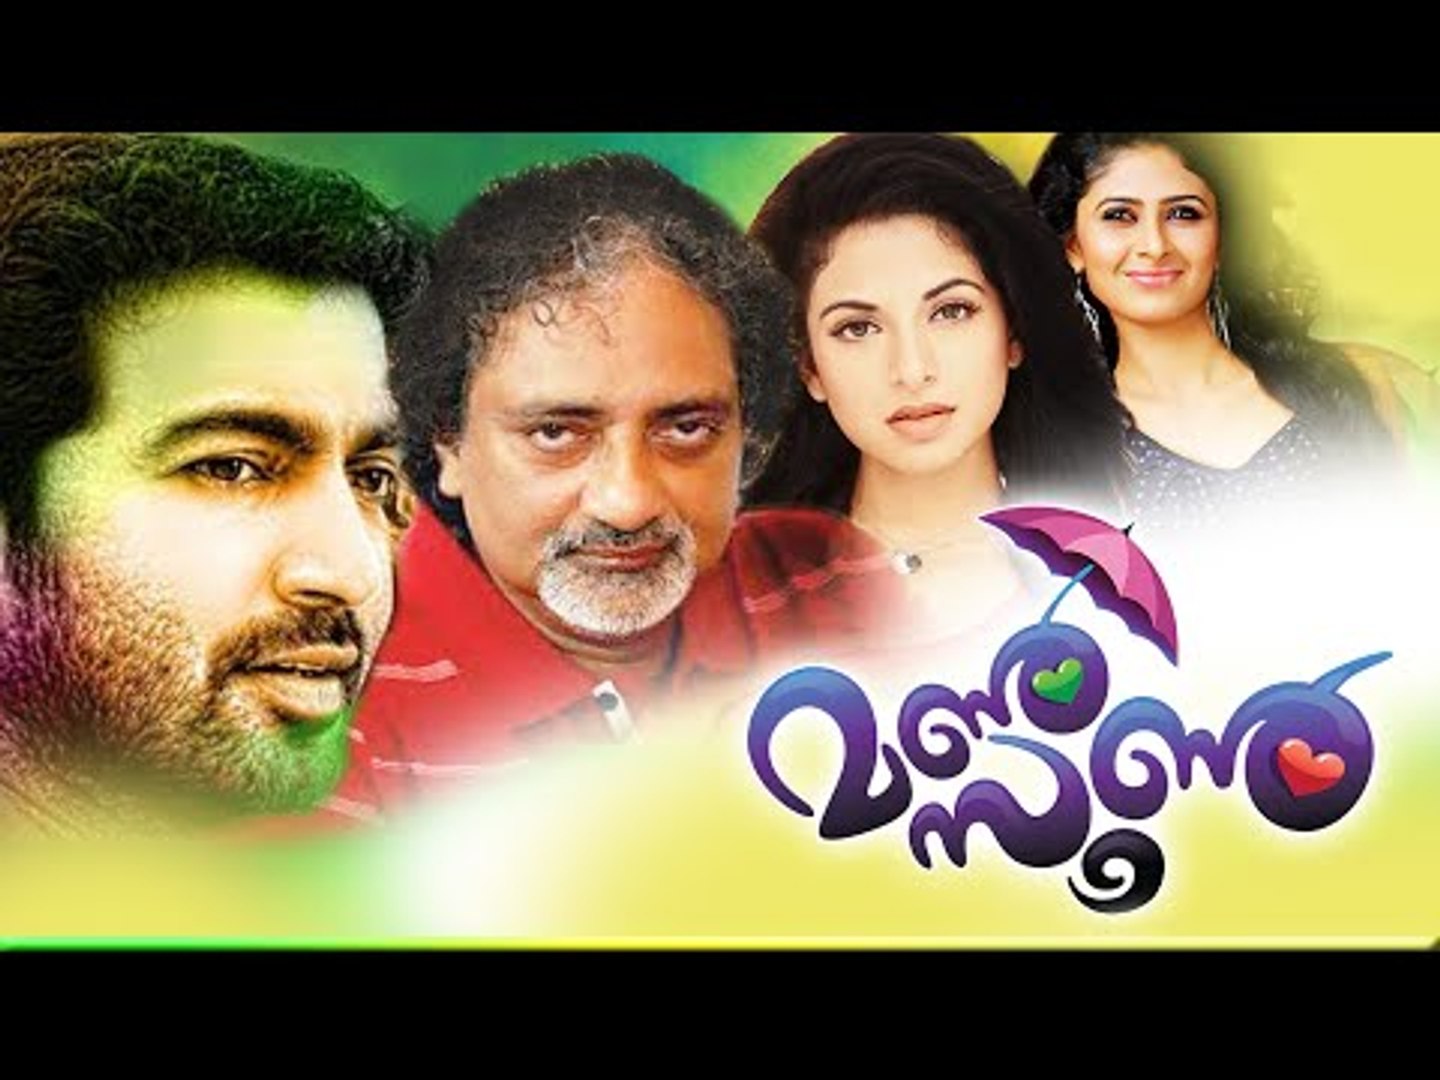 Malayalam Full Movie 2016 | Monsoon | Malayalam New Movies 2016 Full Movie | Latest Comedy Movies